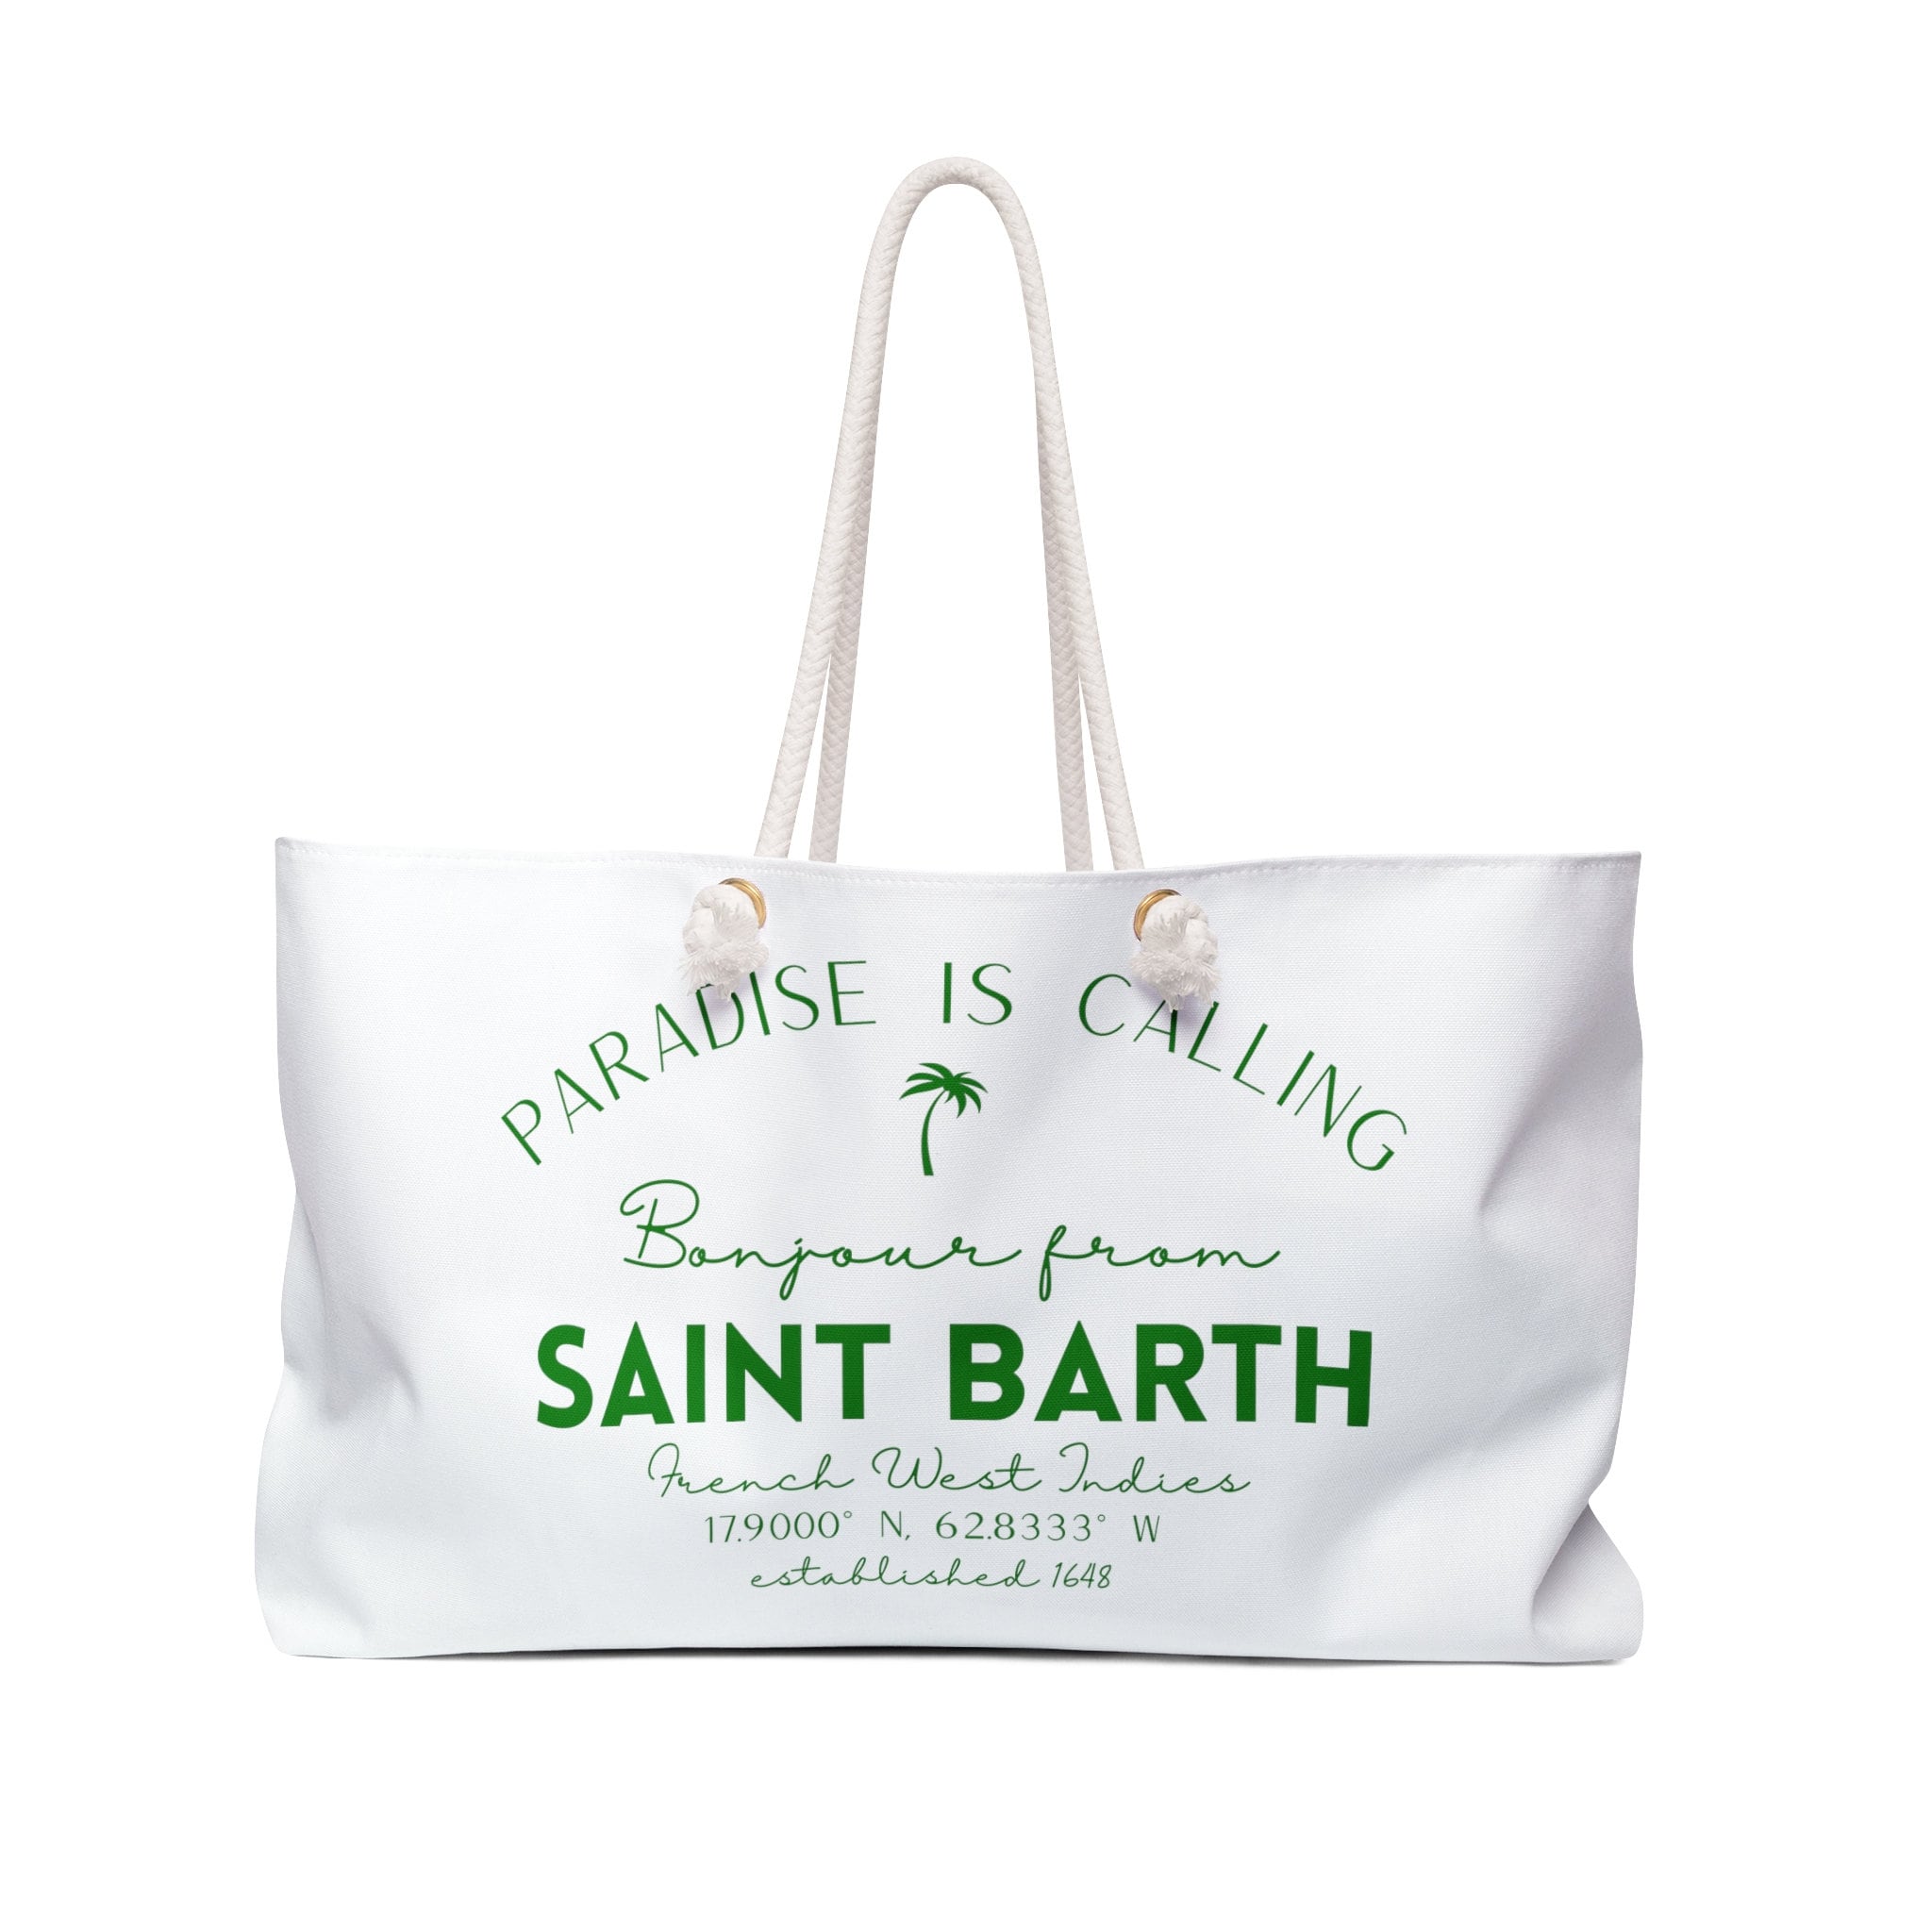 St. Barth: Shopping Paradise